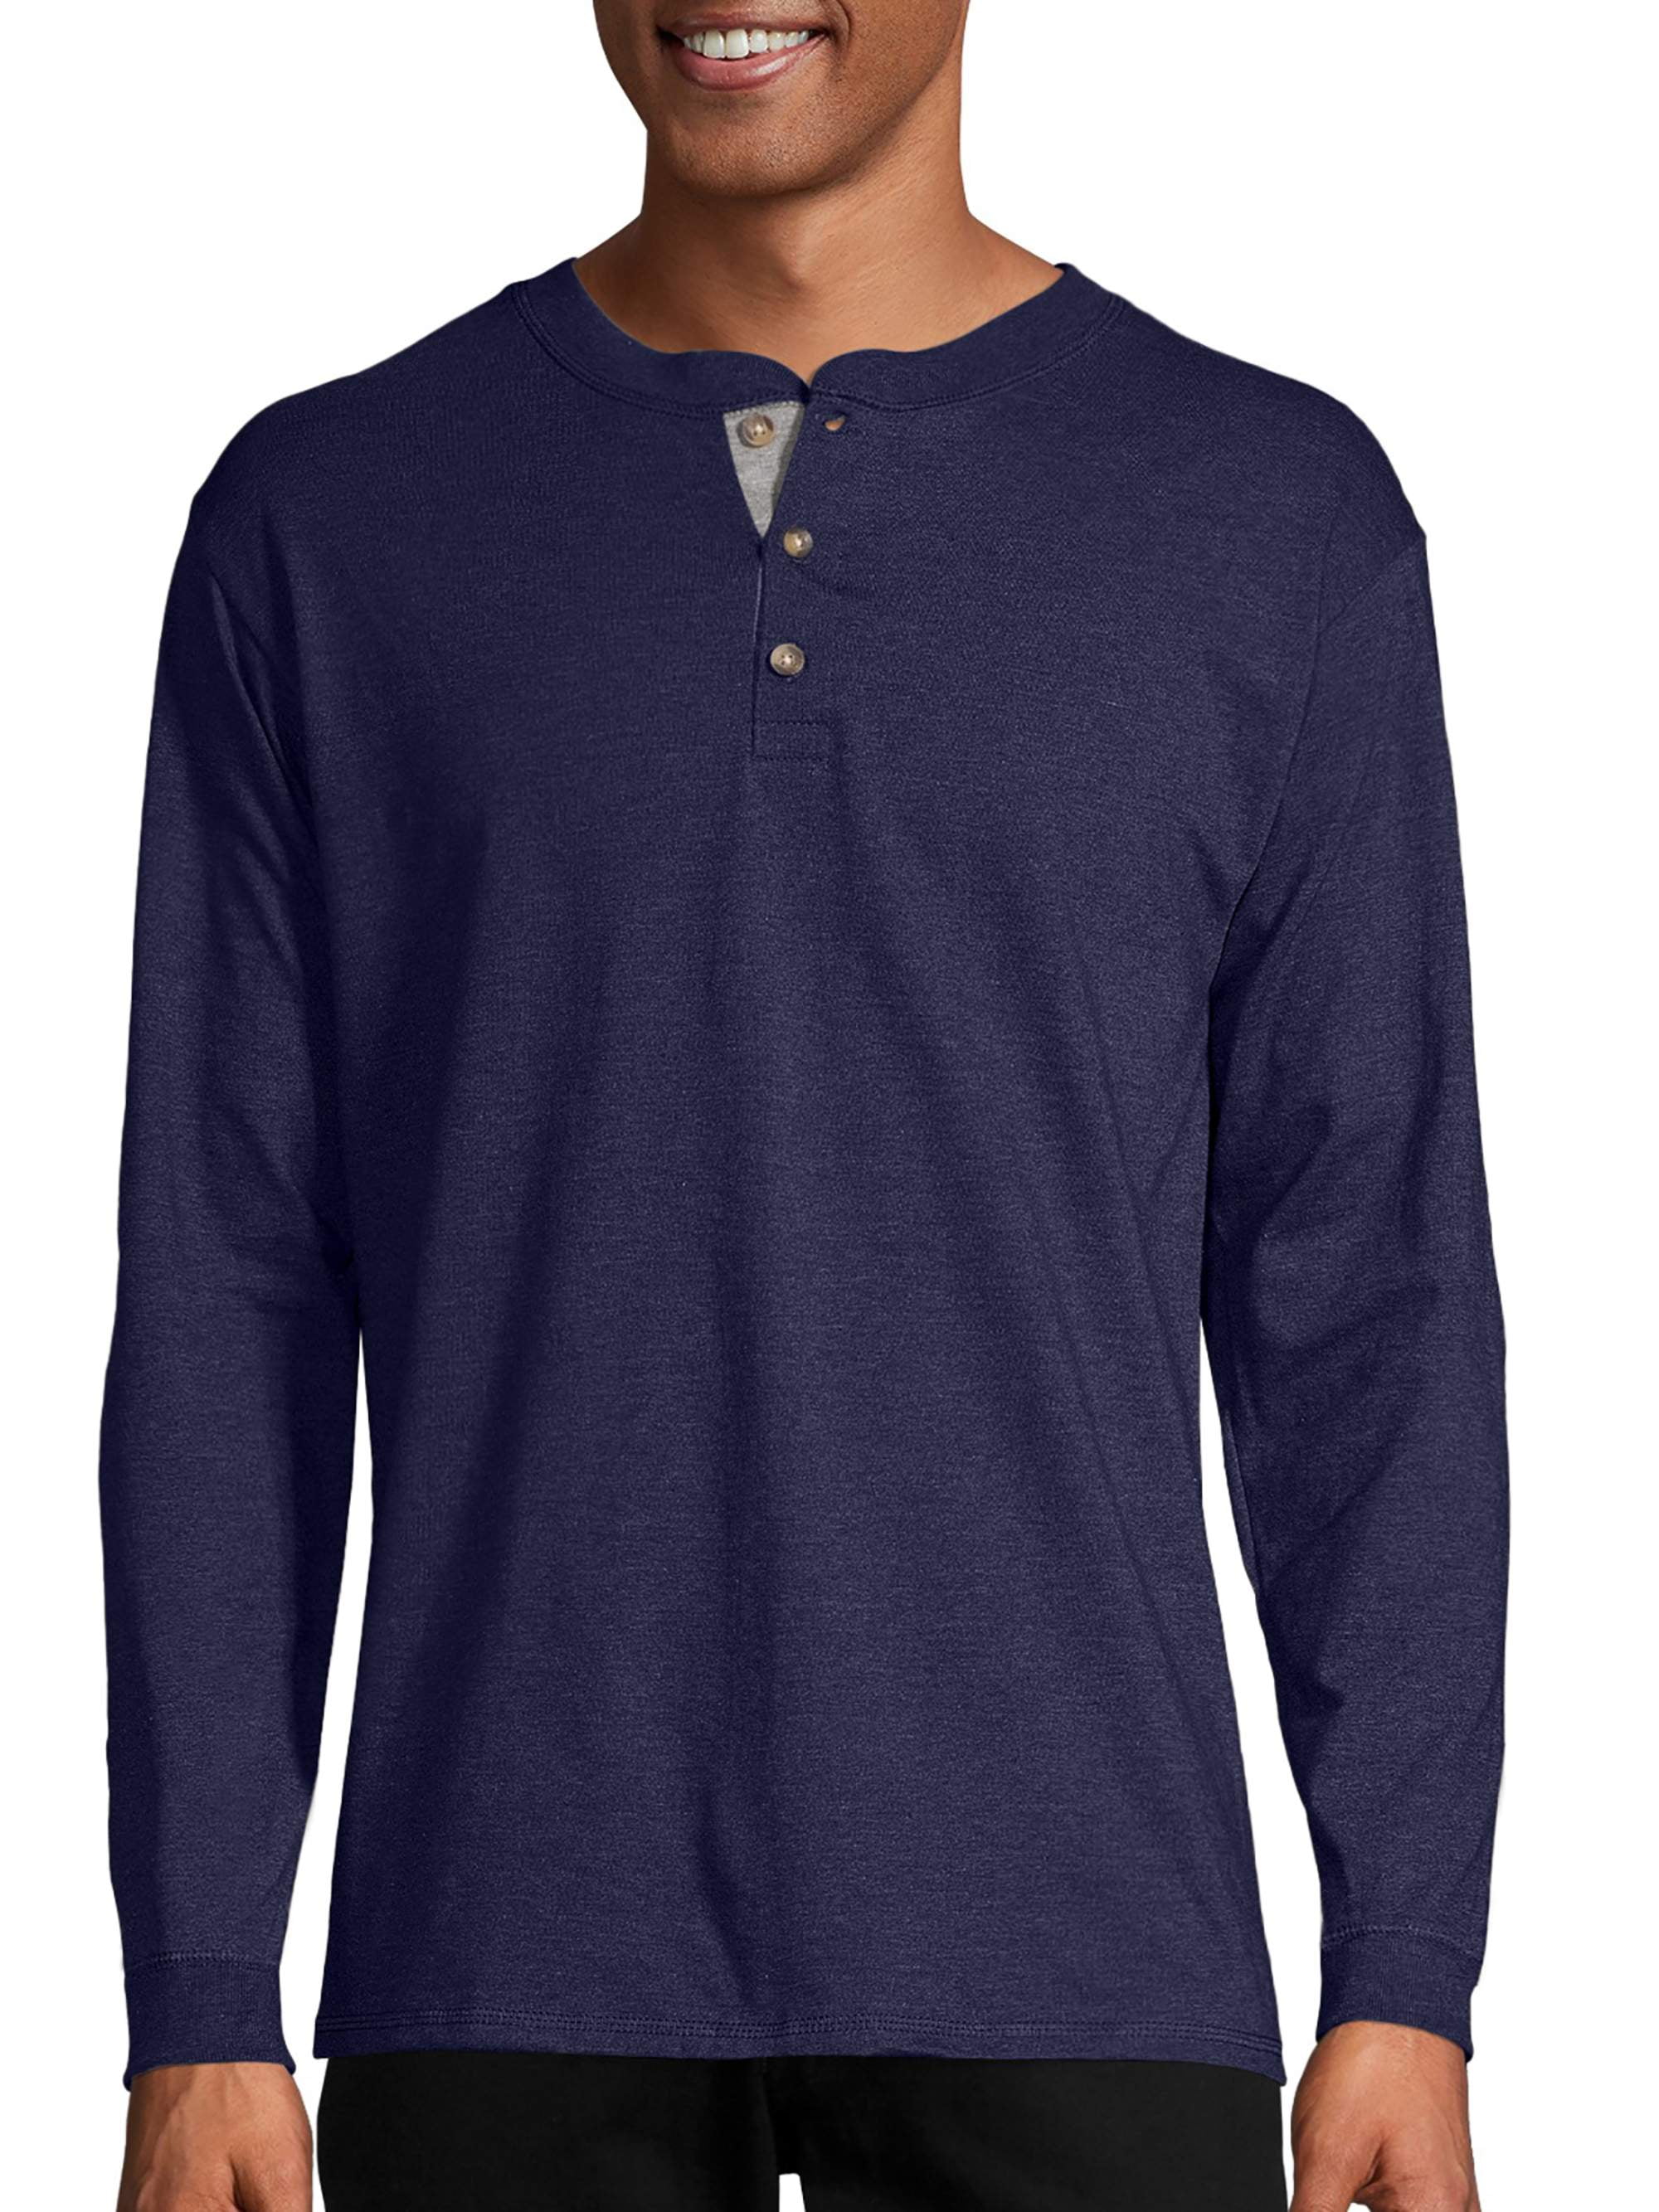 Hanes Men's Long-Sleeve Henley Shirt Beefy-T pure cotton 3 button S-3XL  Tagless